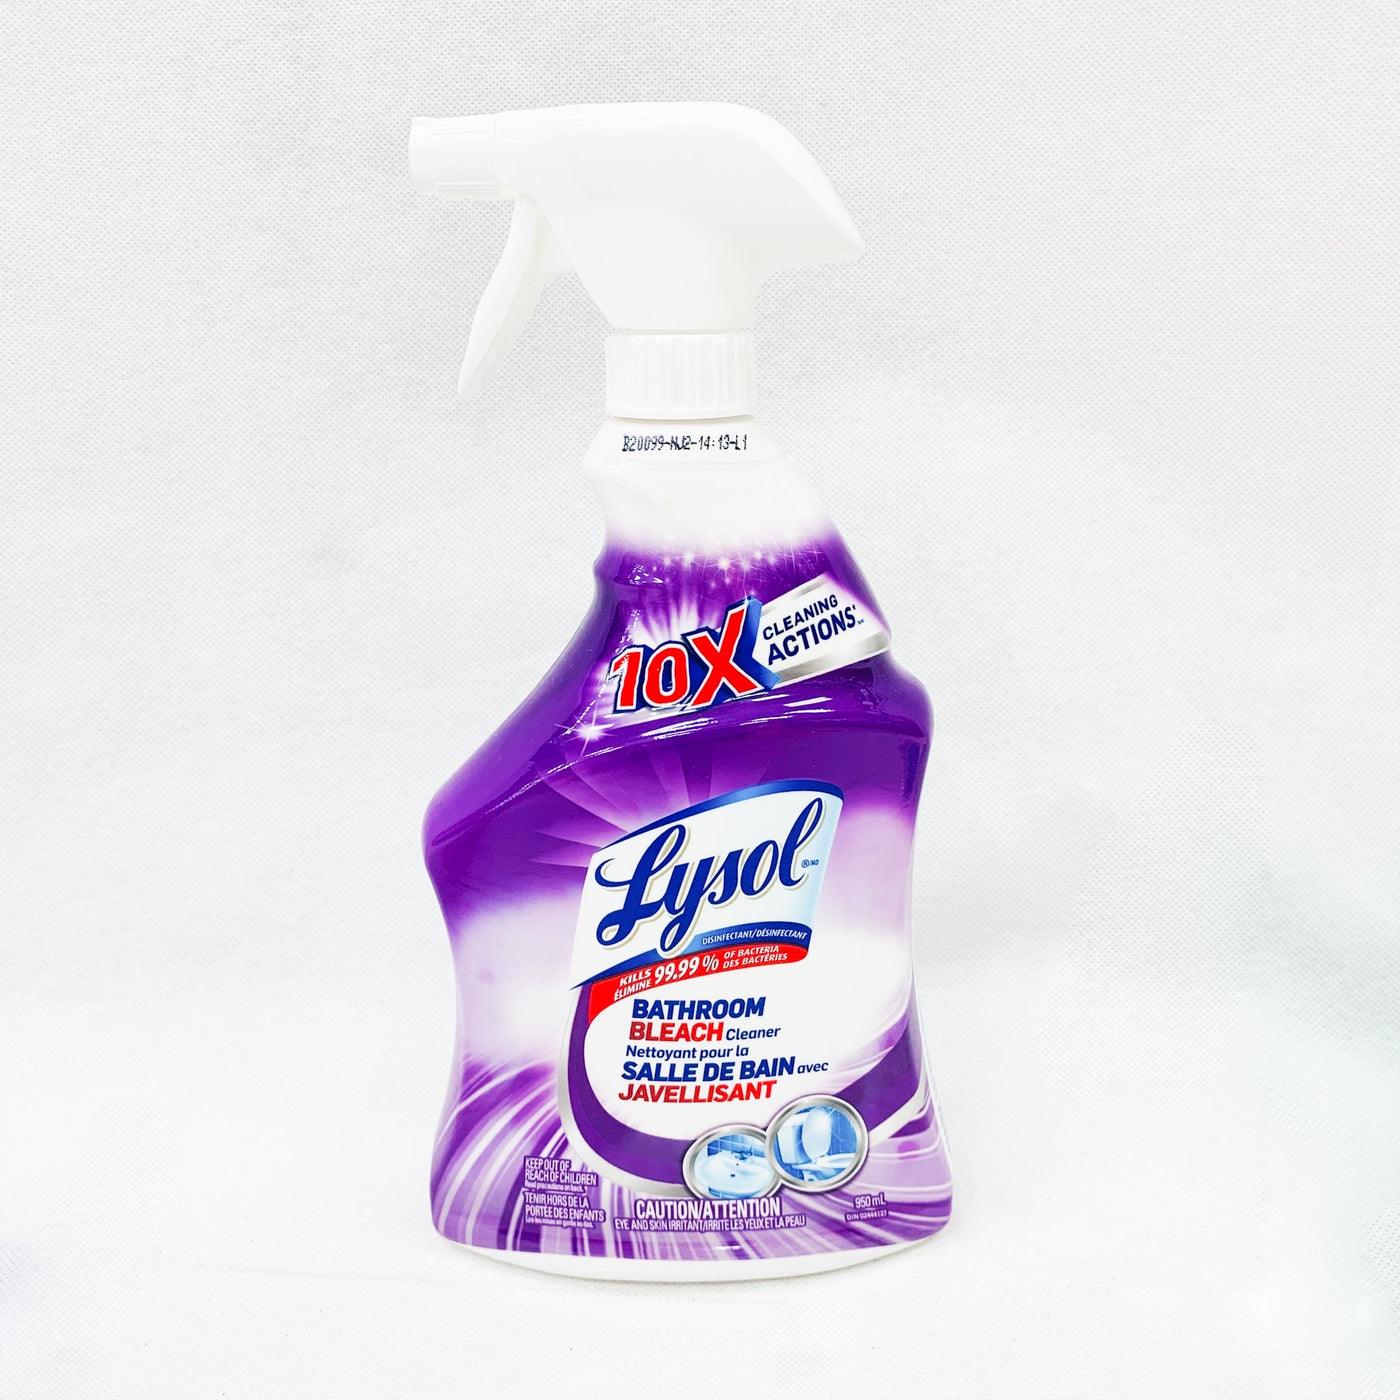 Lysol Bathroom Bleach Cleaner